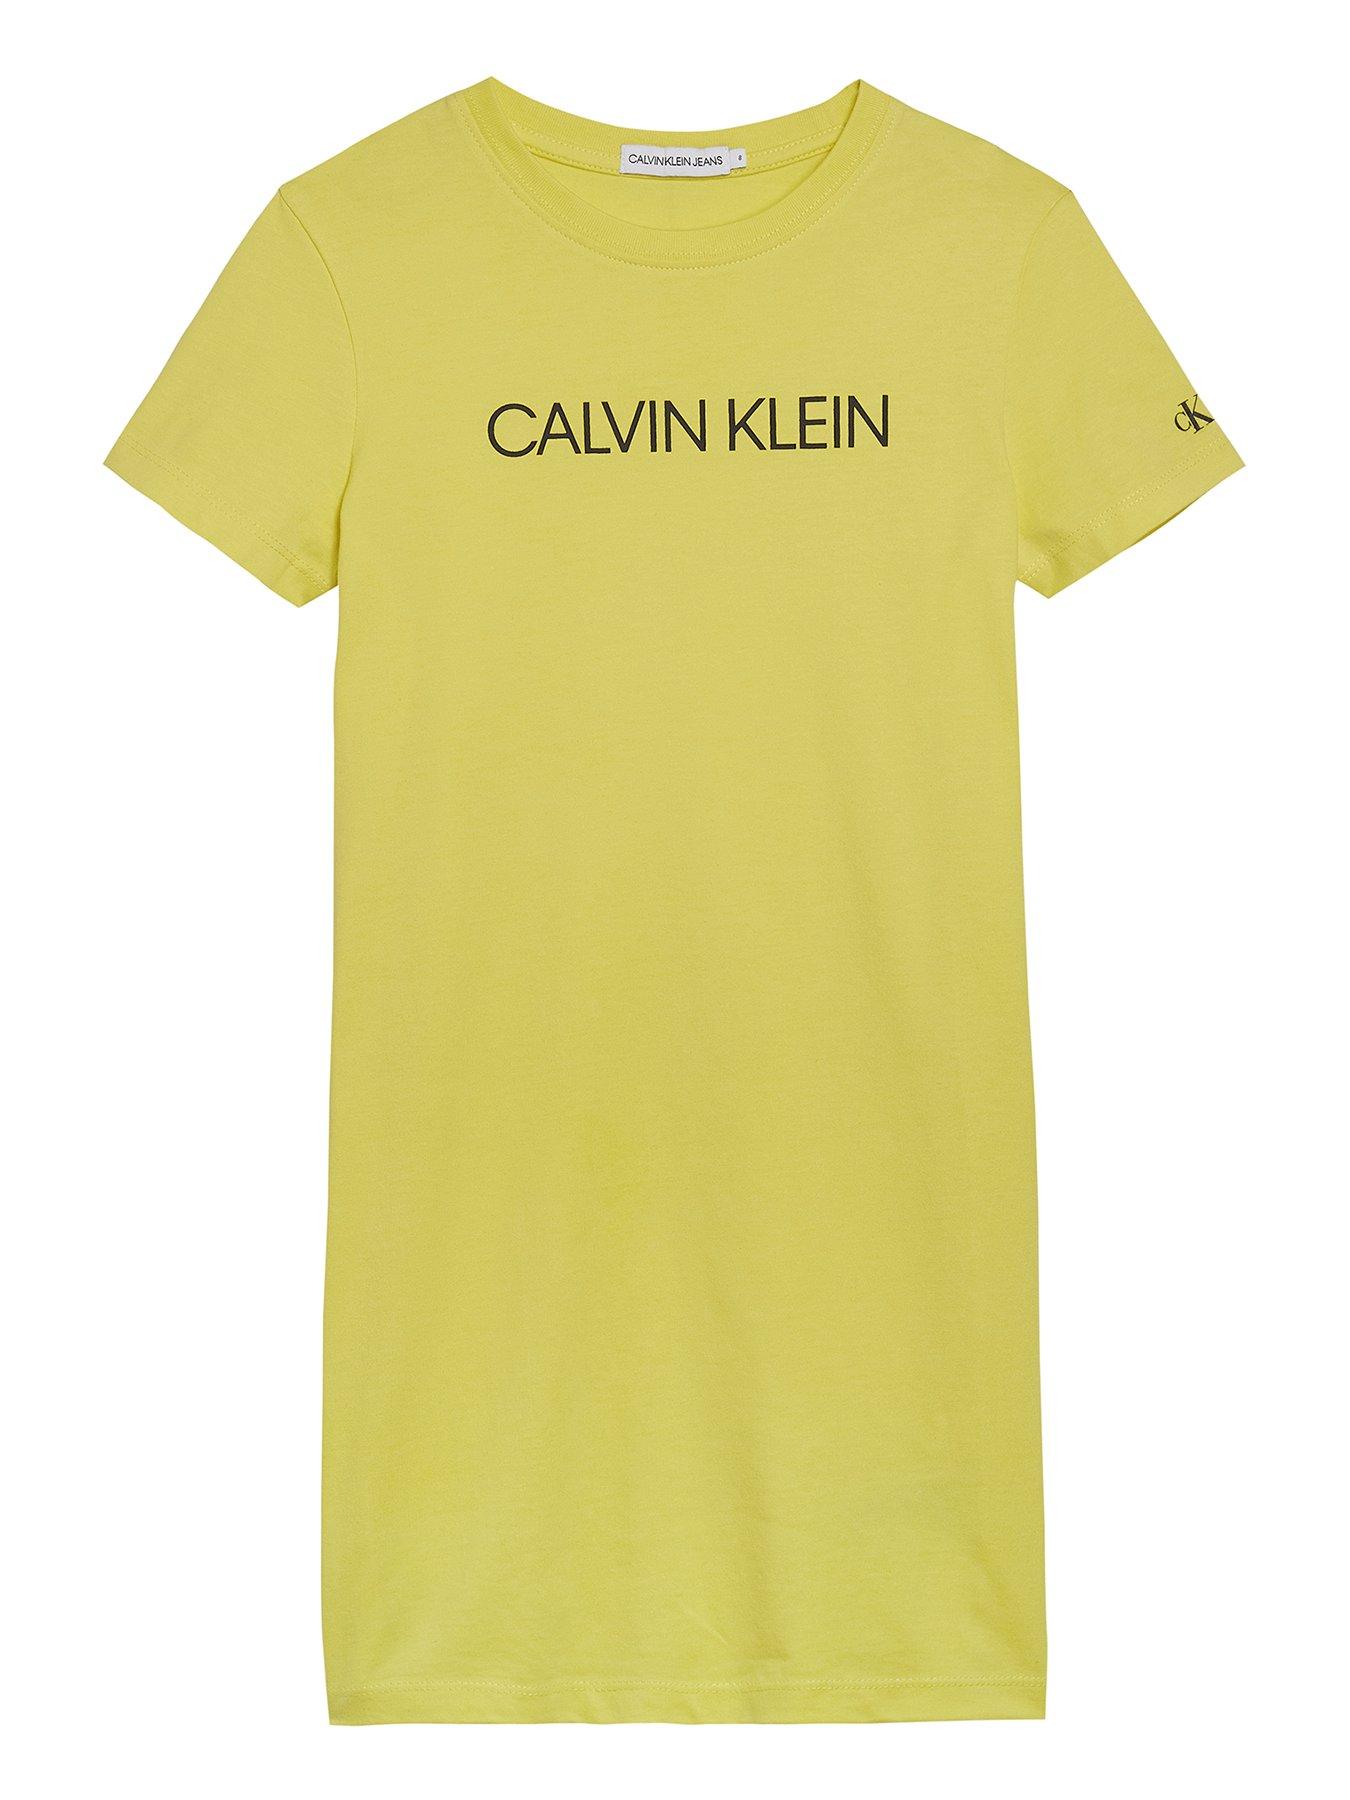 calvin klein institutional logo dress